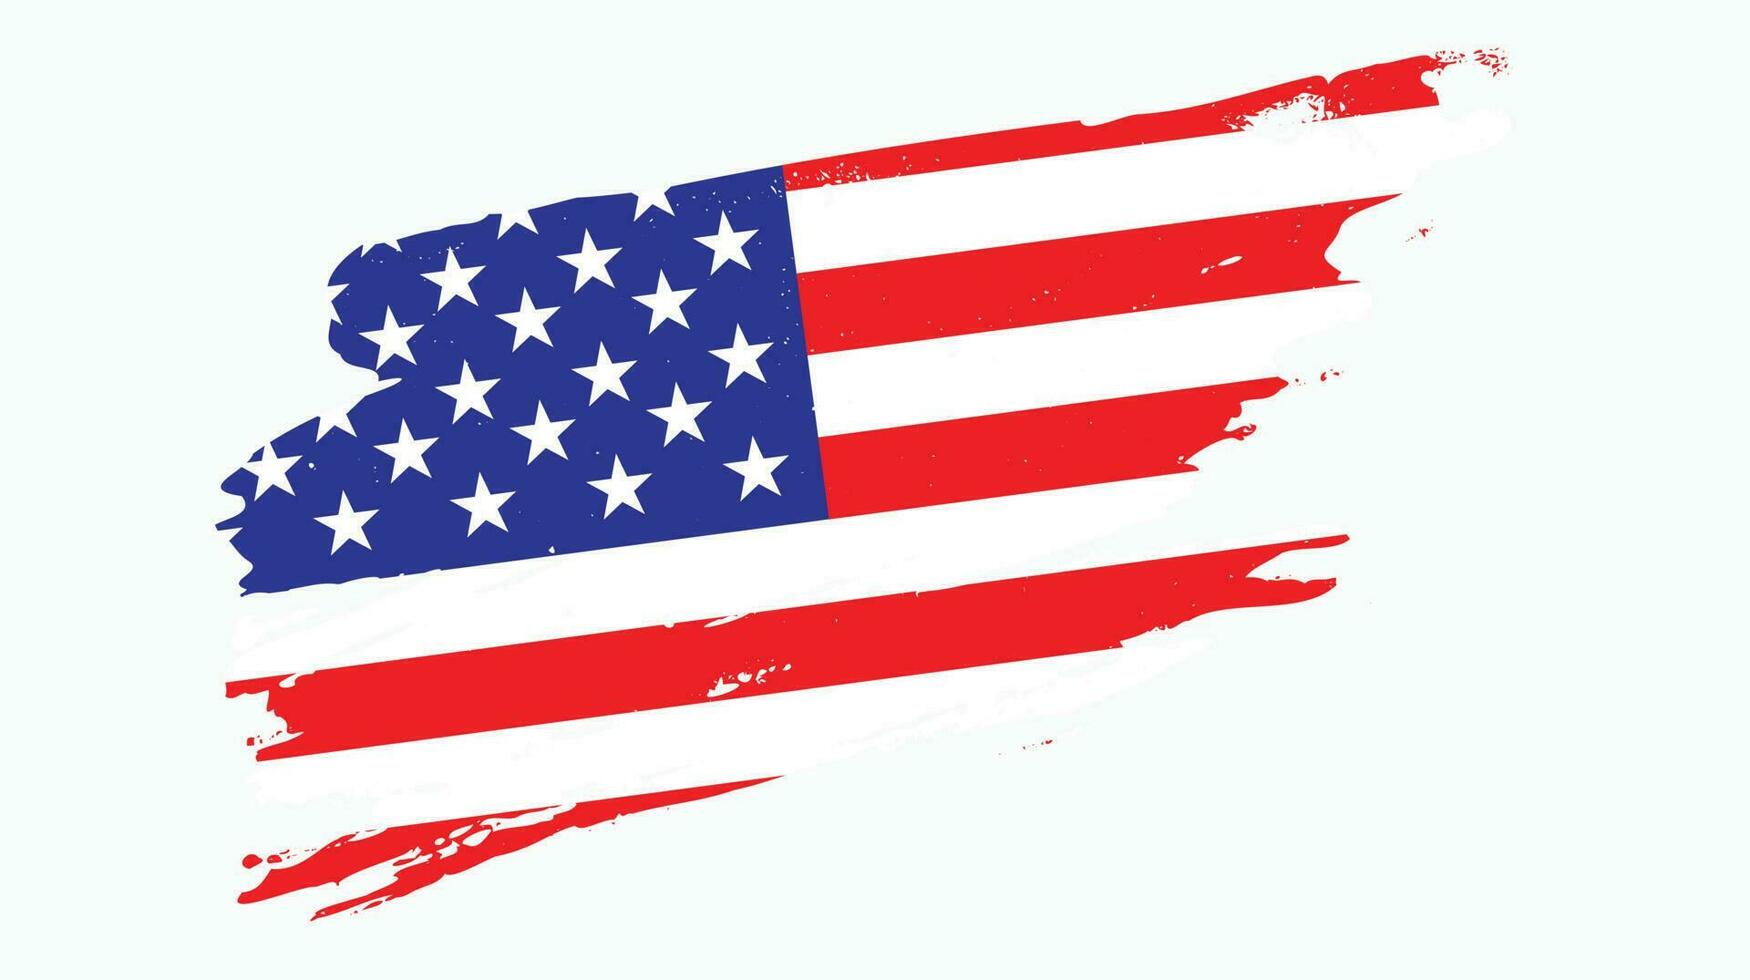 Verenigde Staten van Amerika grunge structuur vervaagd vlag ontwerp vector